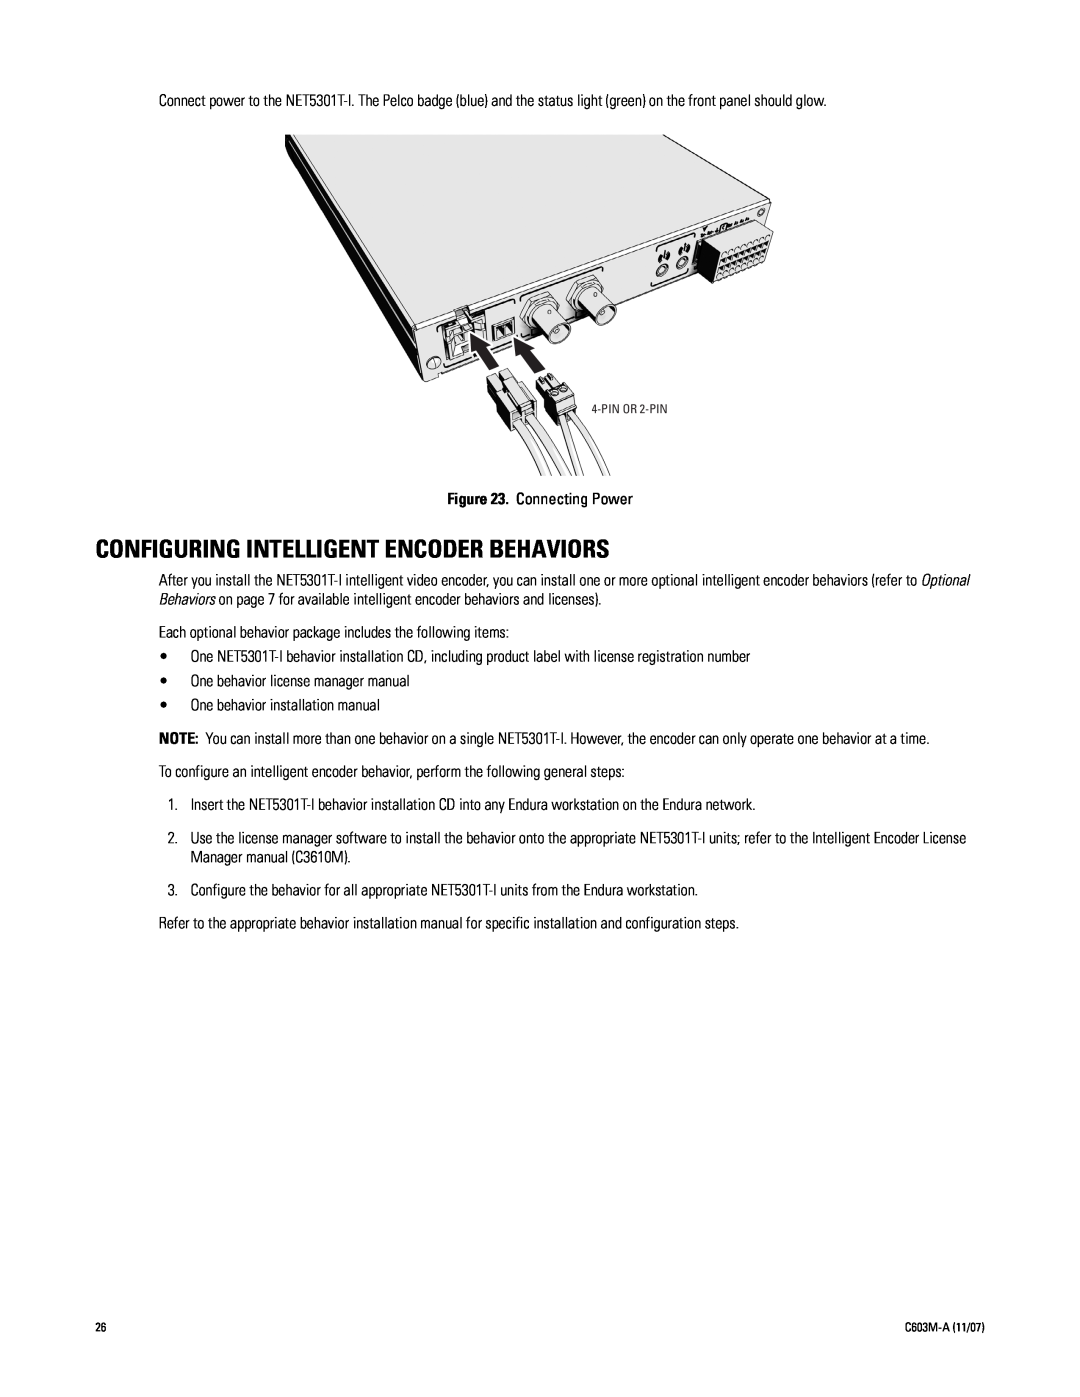 Pelco C603M-A (11/07) manual Configuring Intelligent Encoder Behaviors 